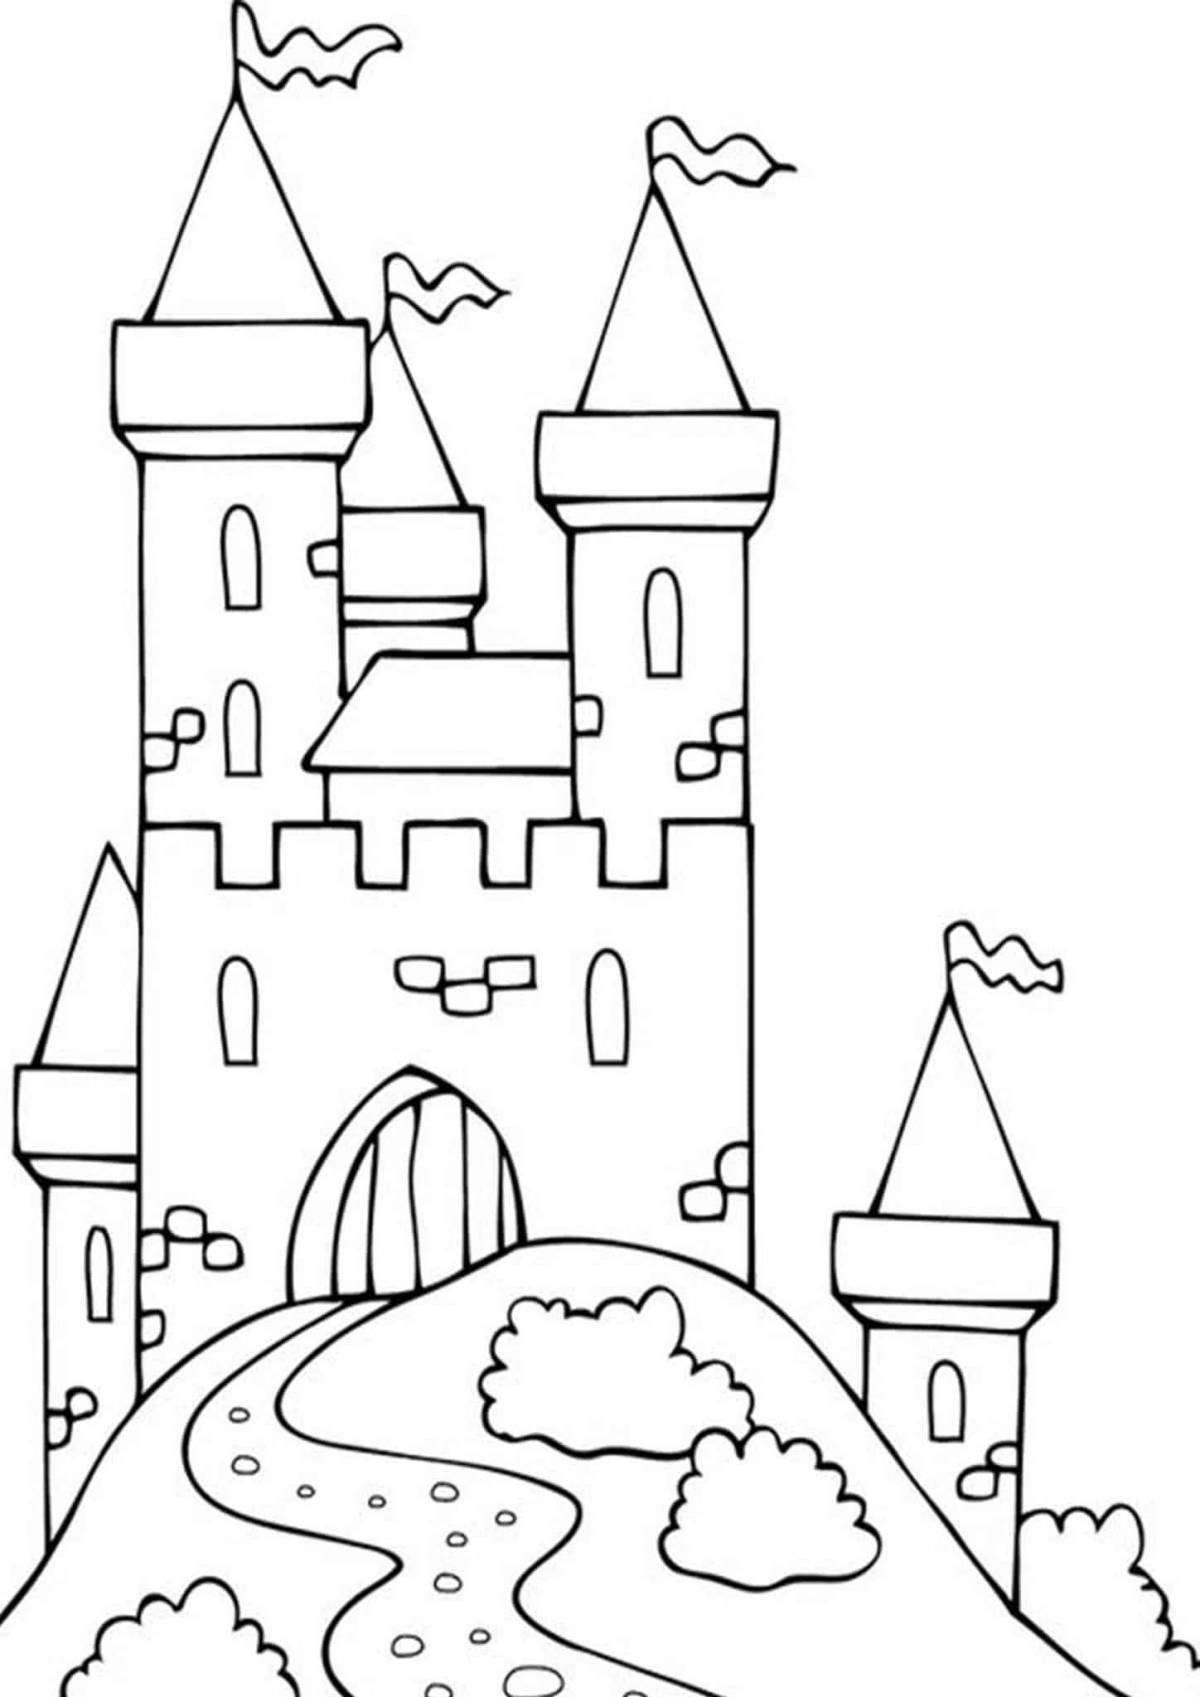 Children's castle coloring book